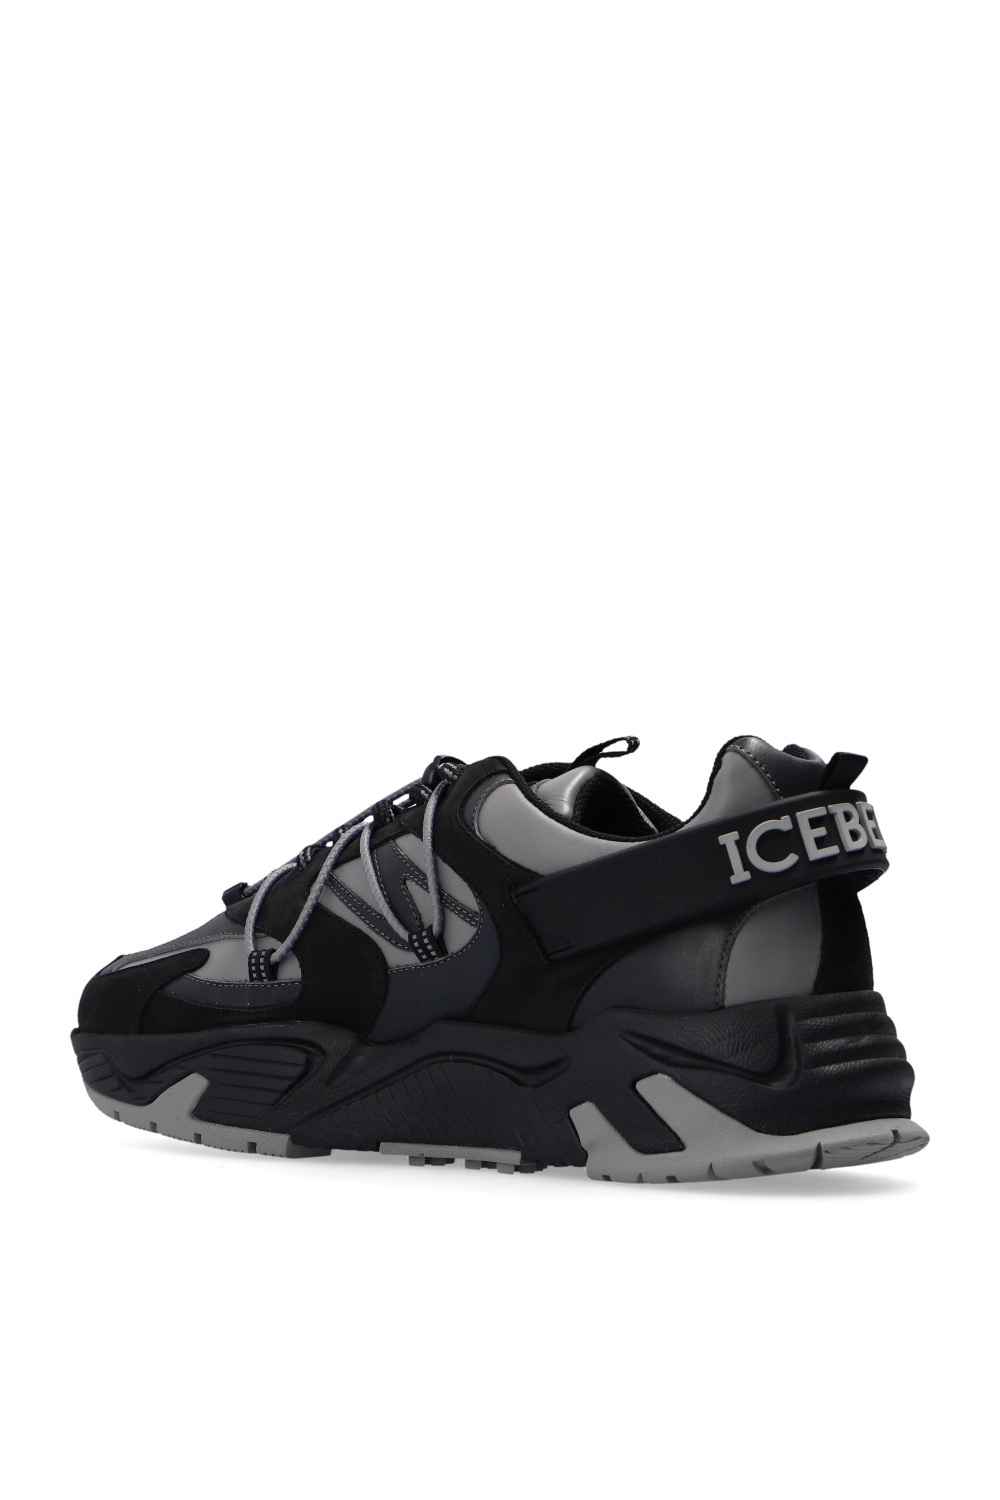 eruption pantry pair Iceberg Sneakers with logo | Men's Shoes | Vitkac